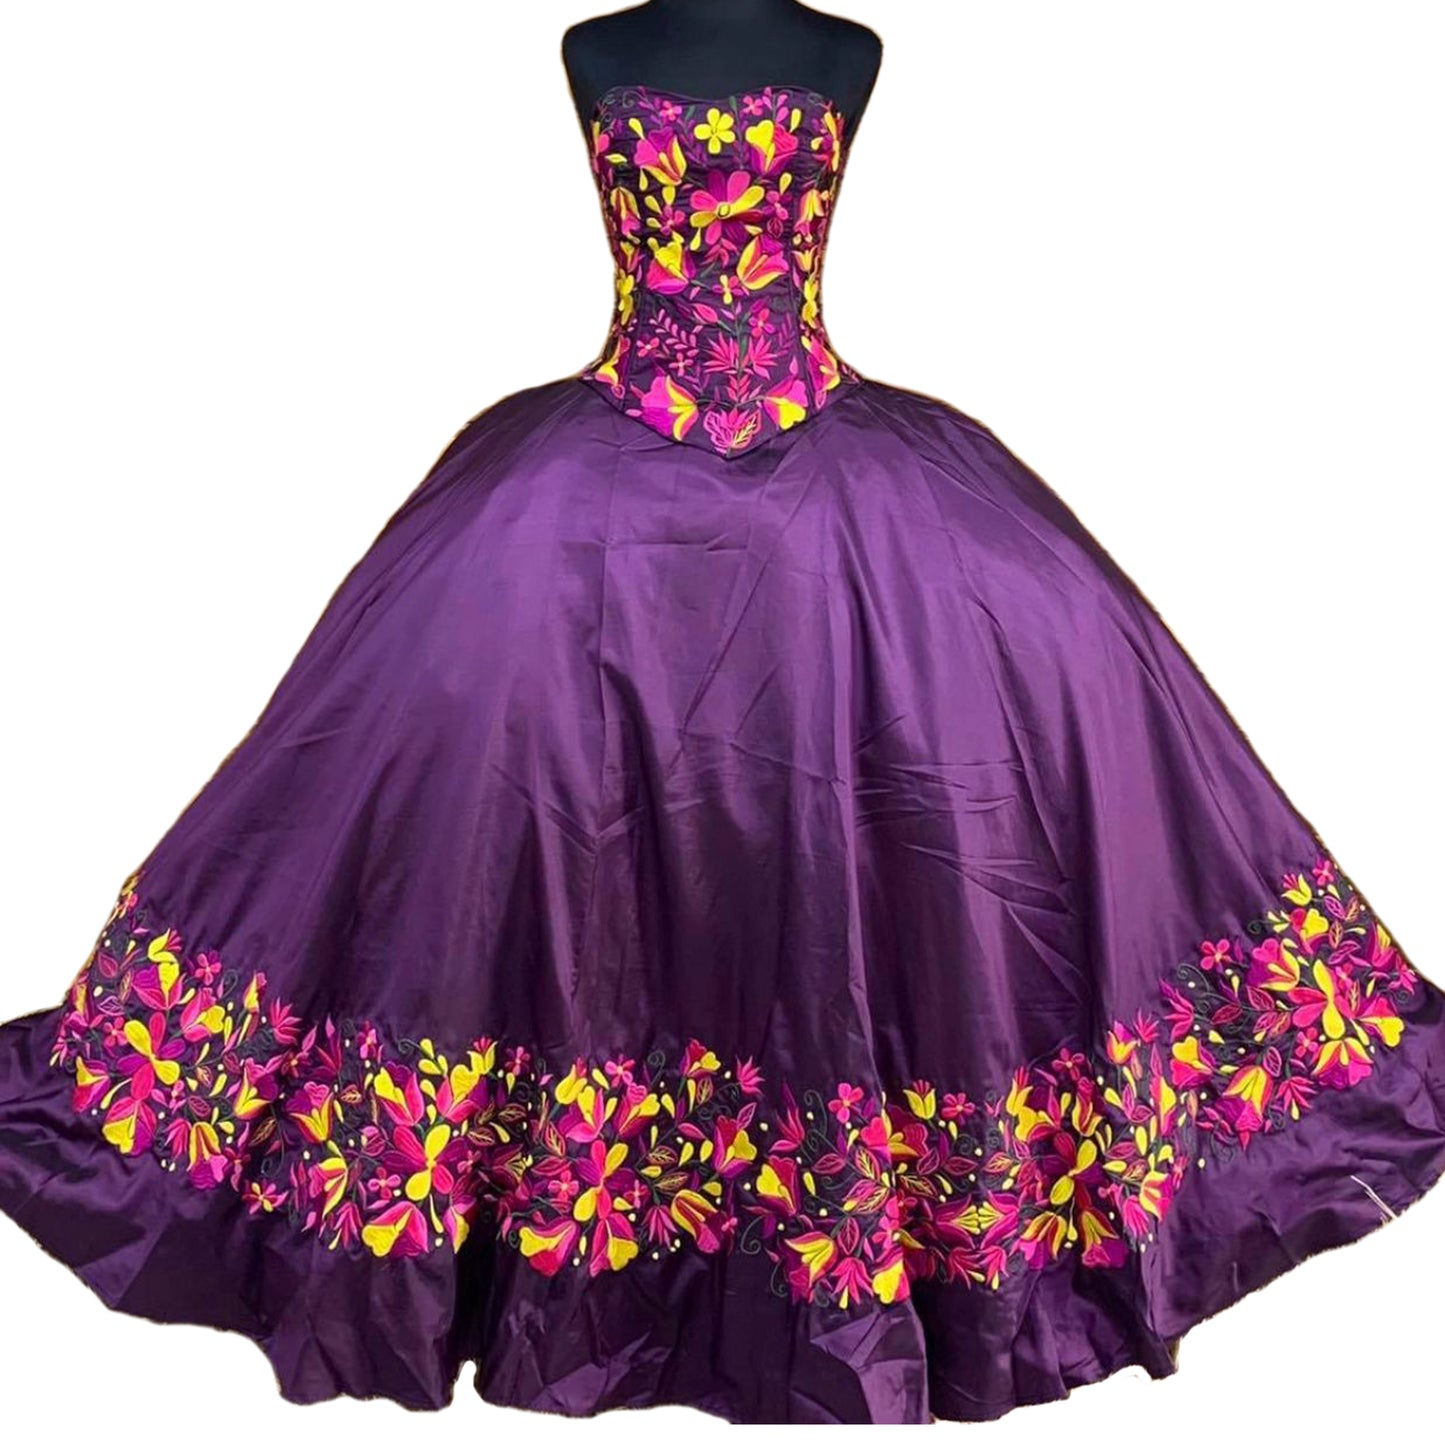 Folkloric Custom Made Dress - Floral Pattern Purple